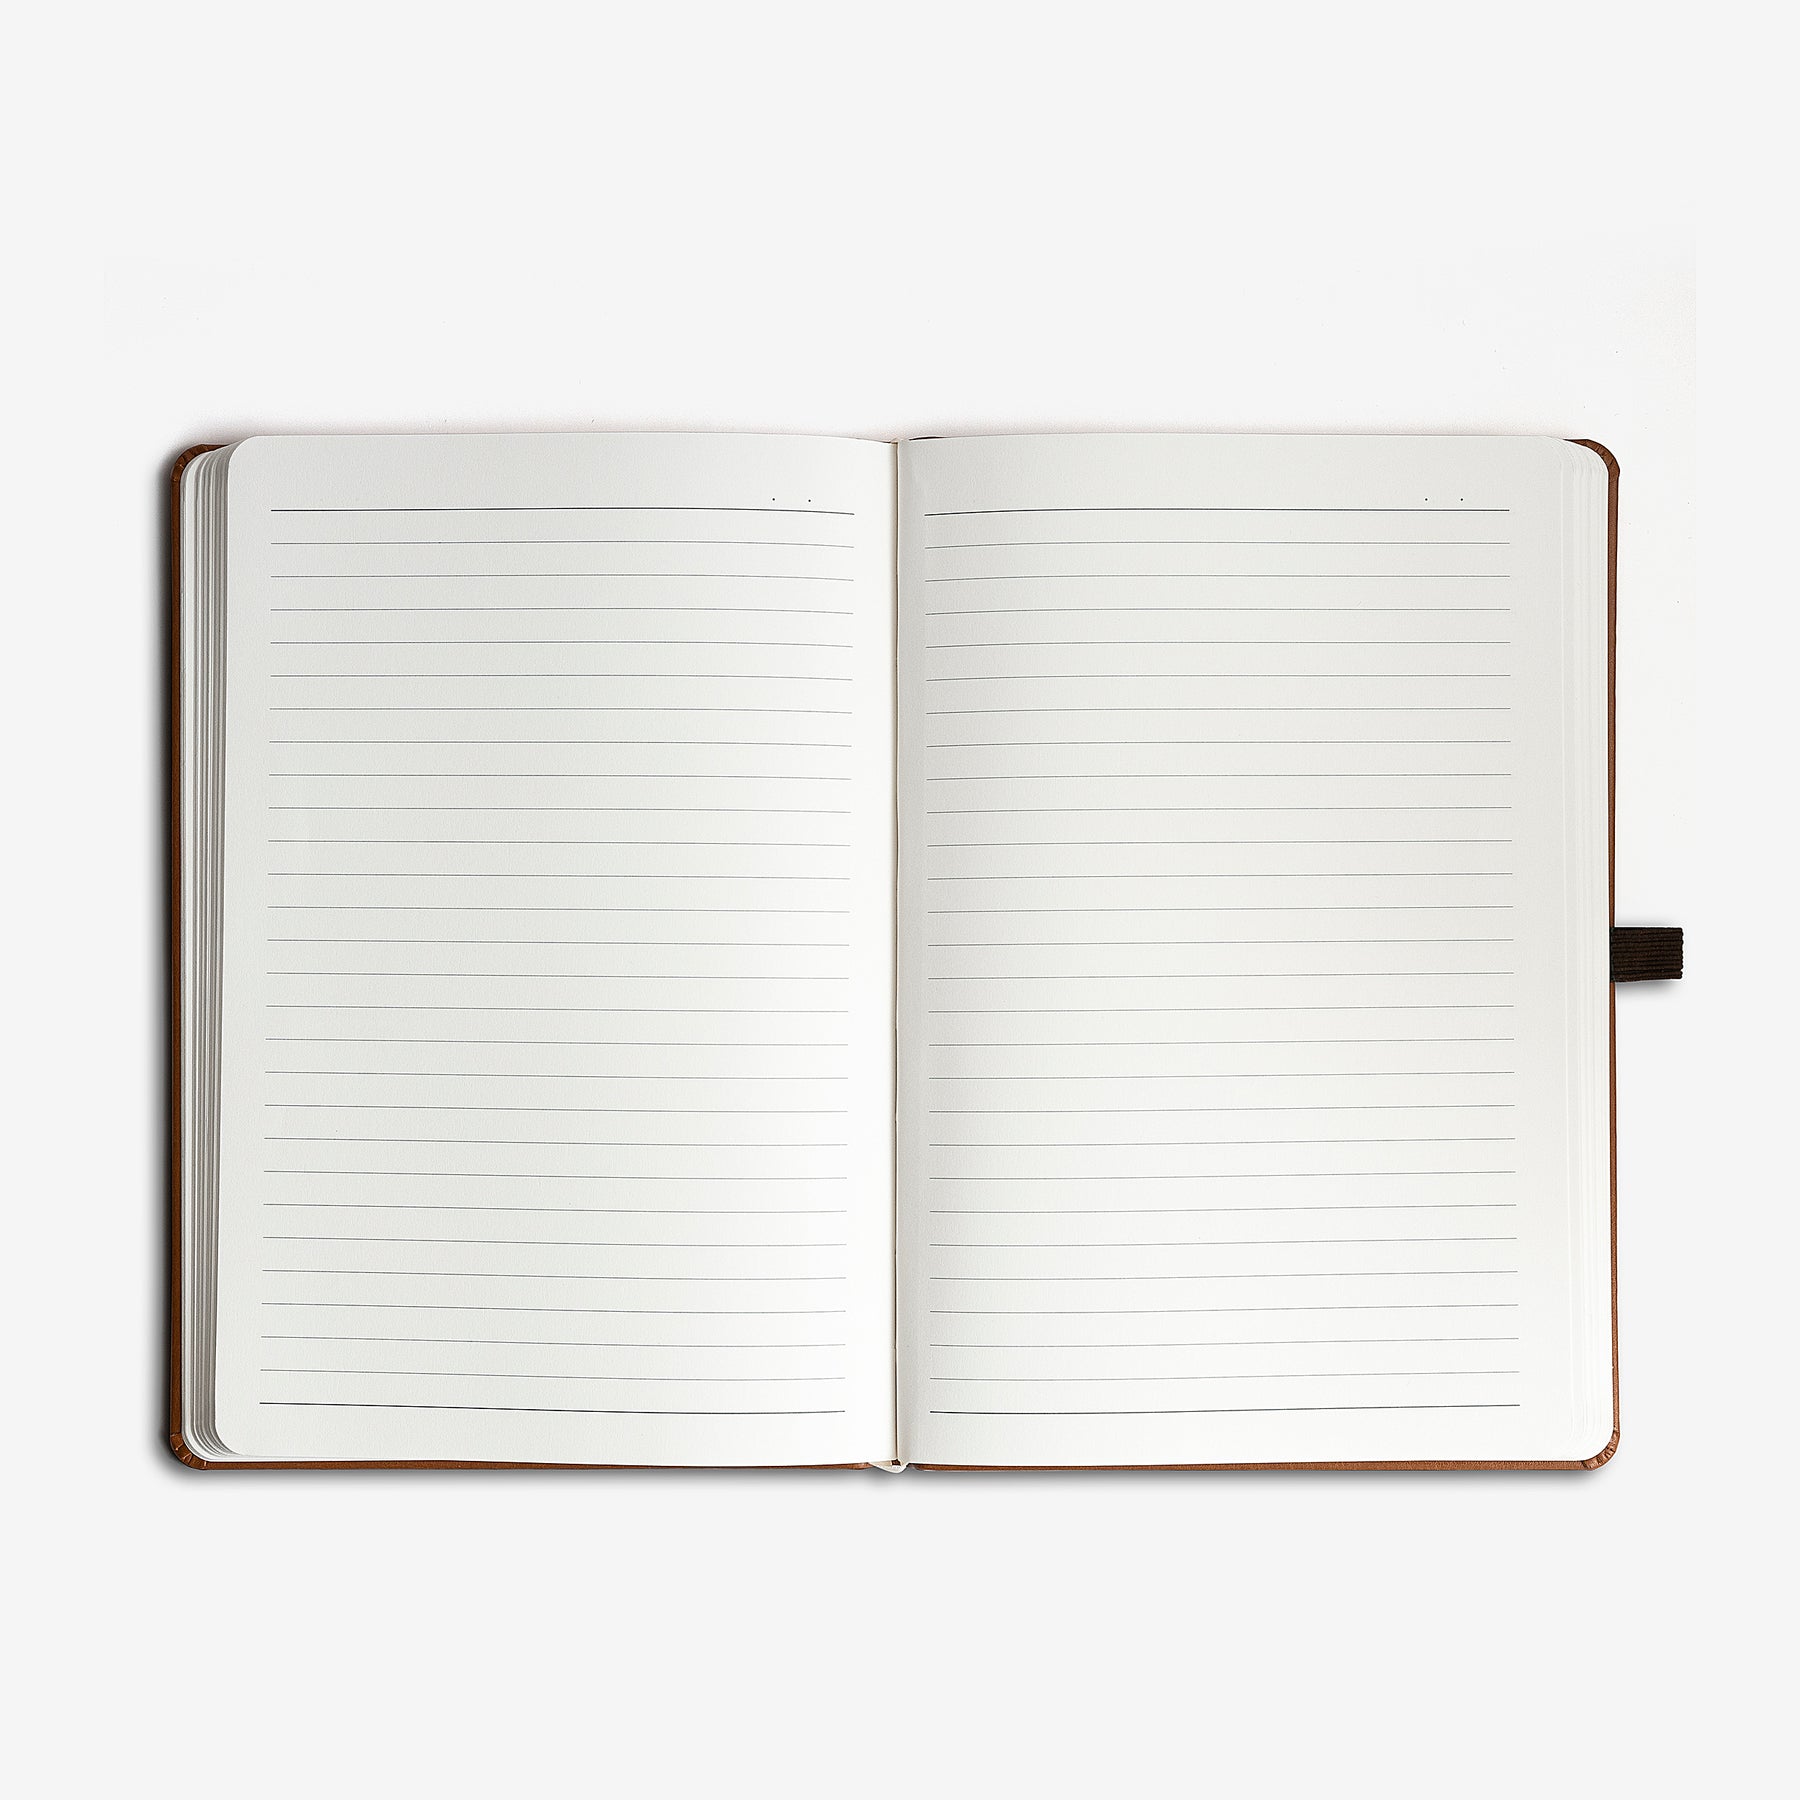 Personalised Hardbound Notebook - Explorer